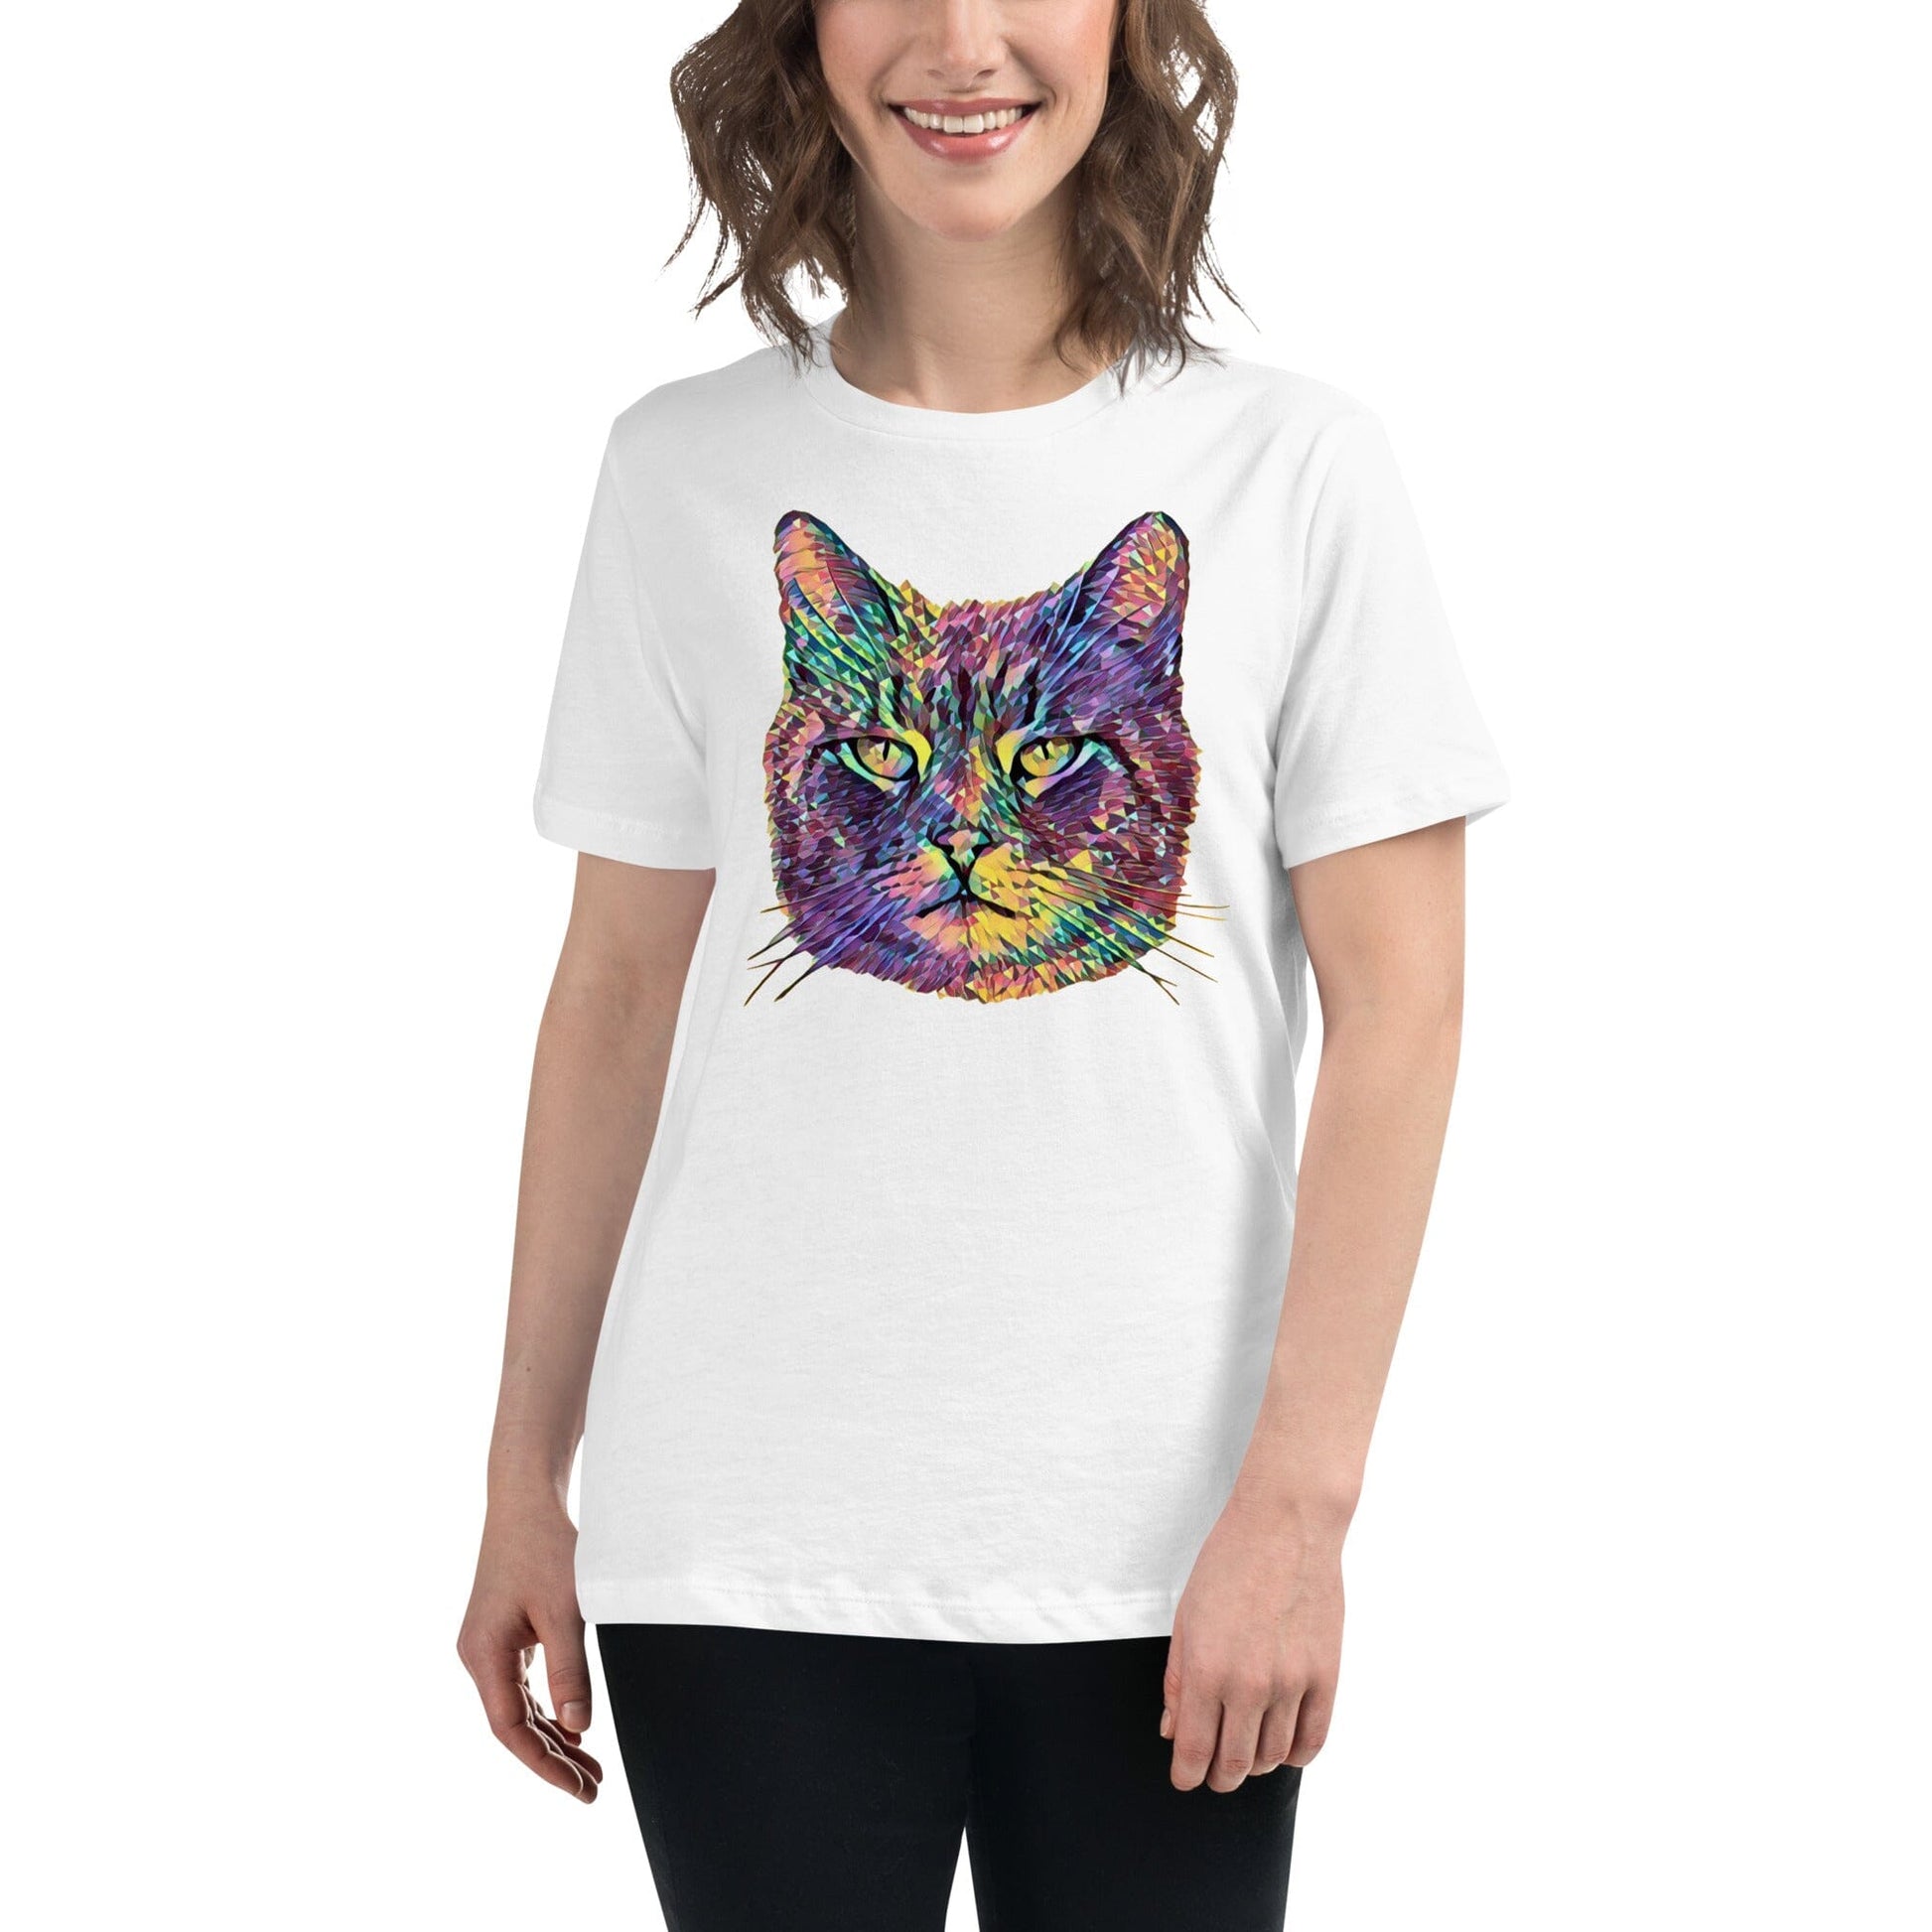 Cat Women's Relaxed T-Shirt JoyousJoyfulJoyness White S 